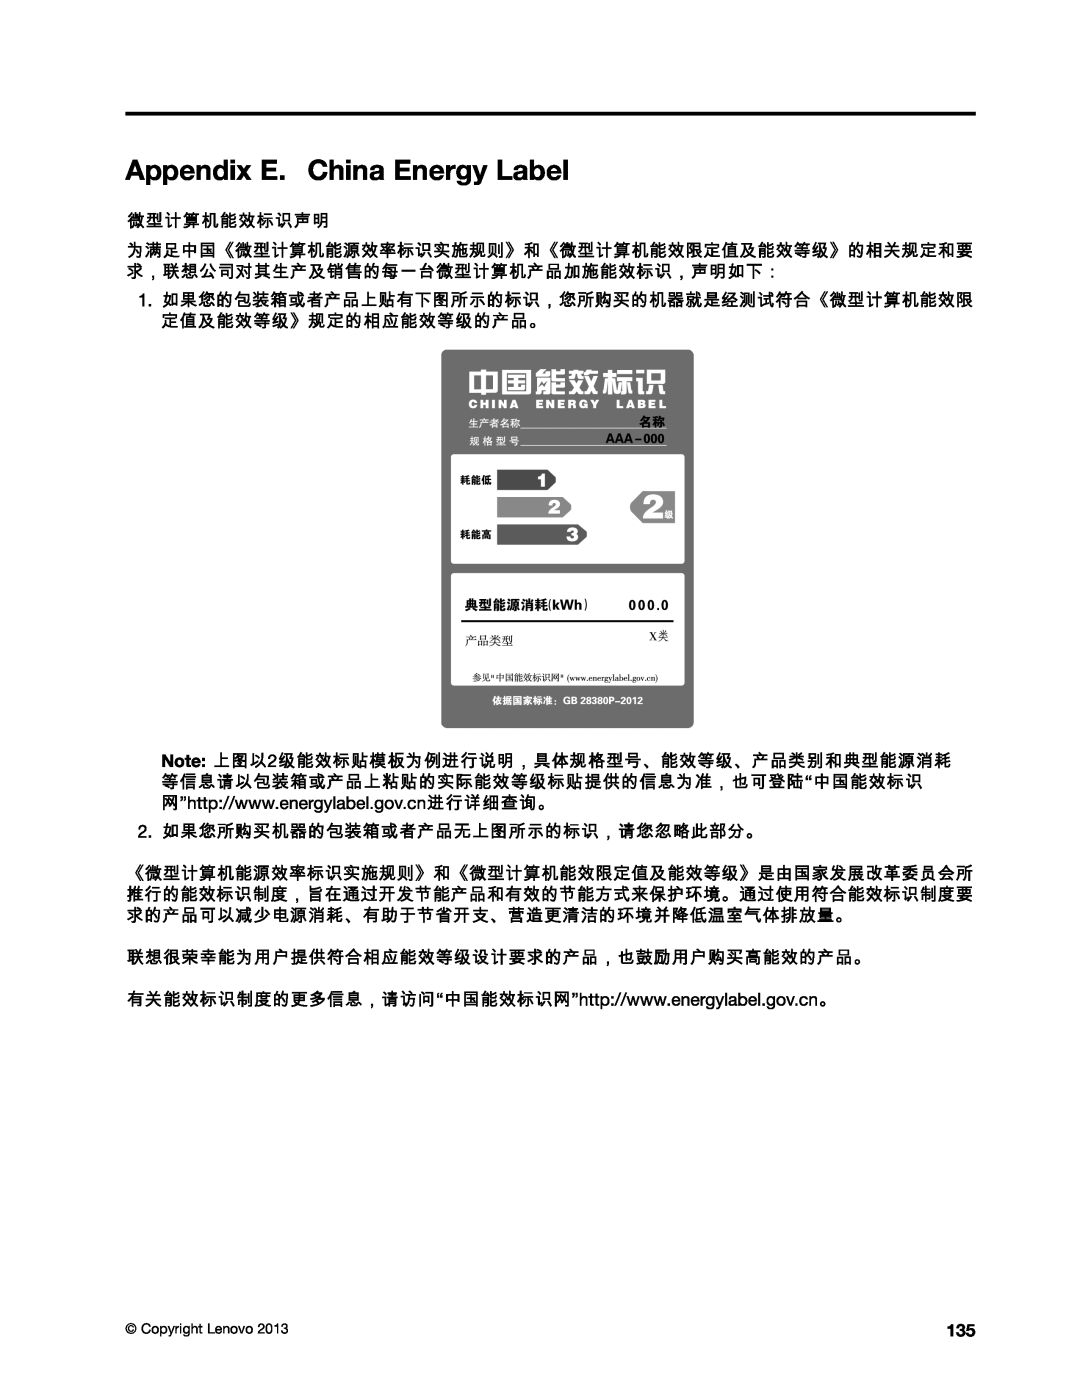 Lenovo M73 manual Appendix E. China Energy Label, Copyright Lenovo 